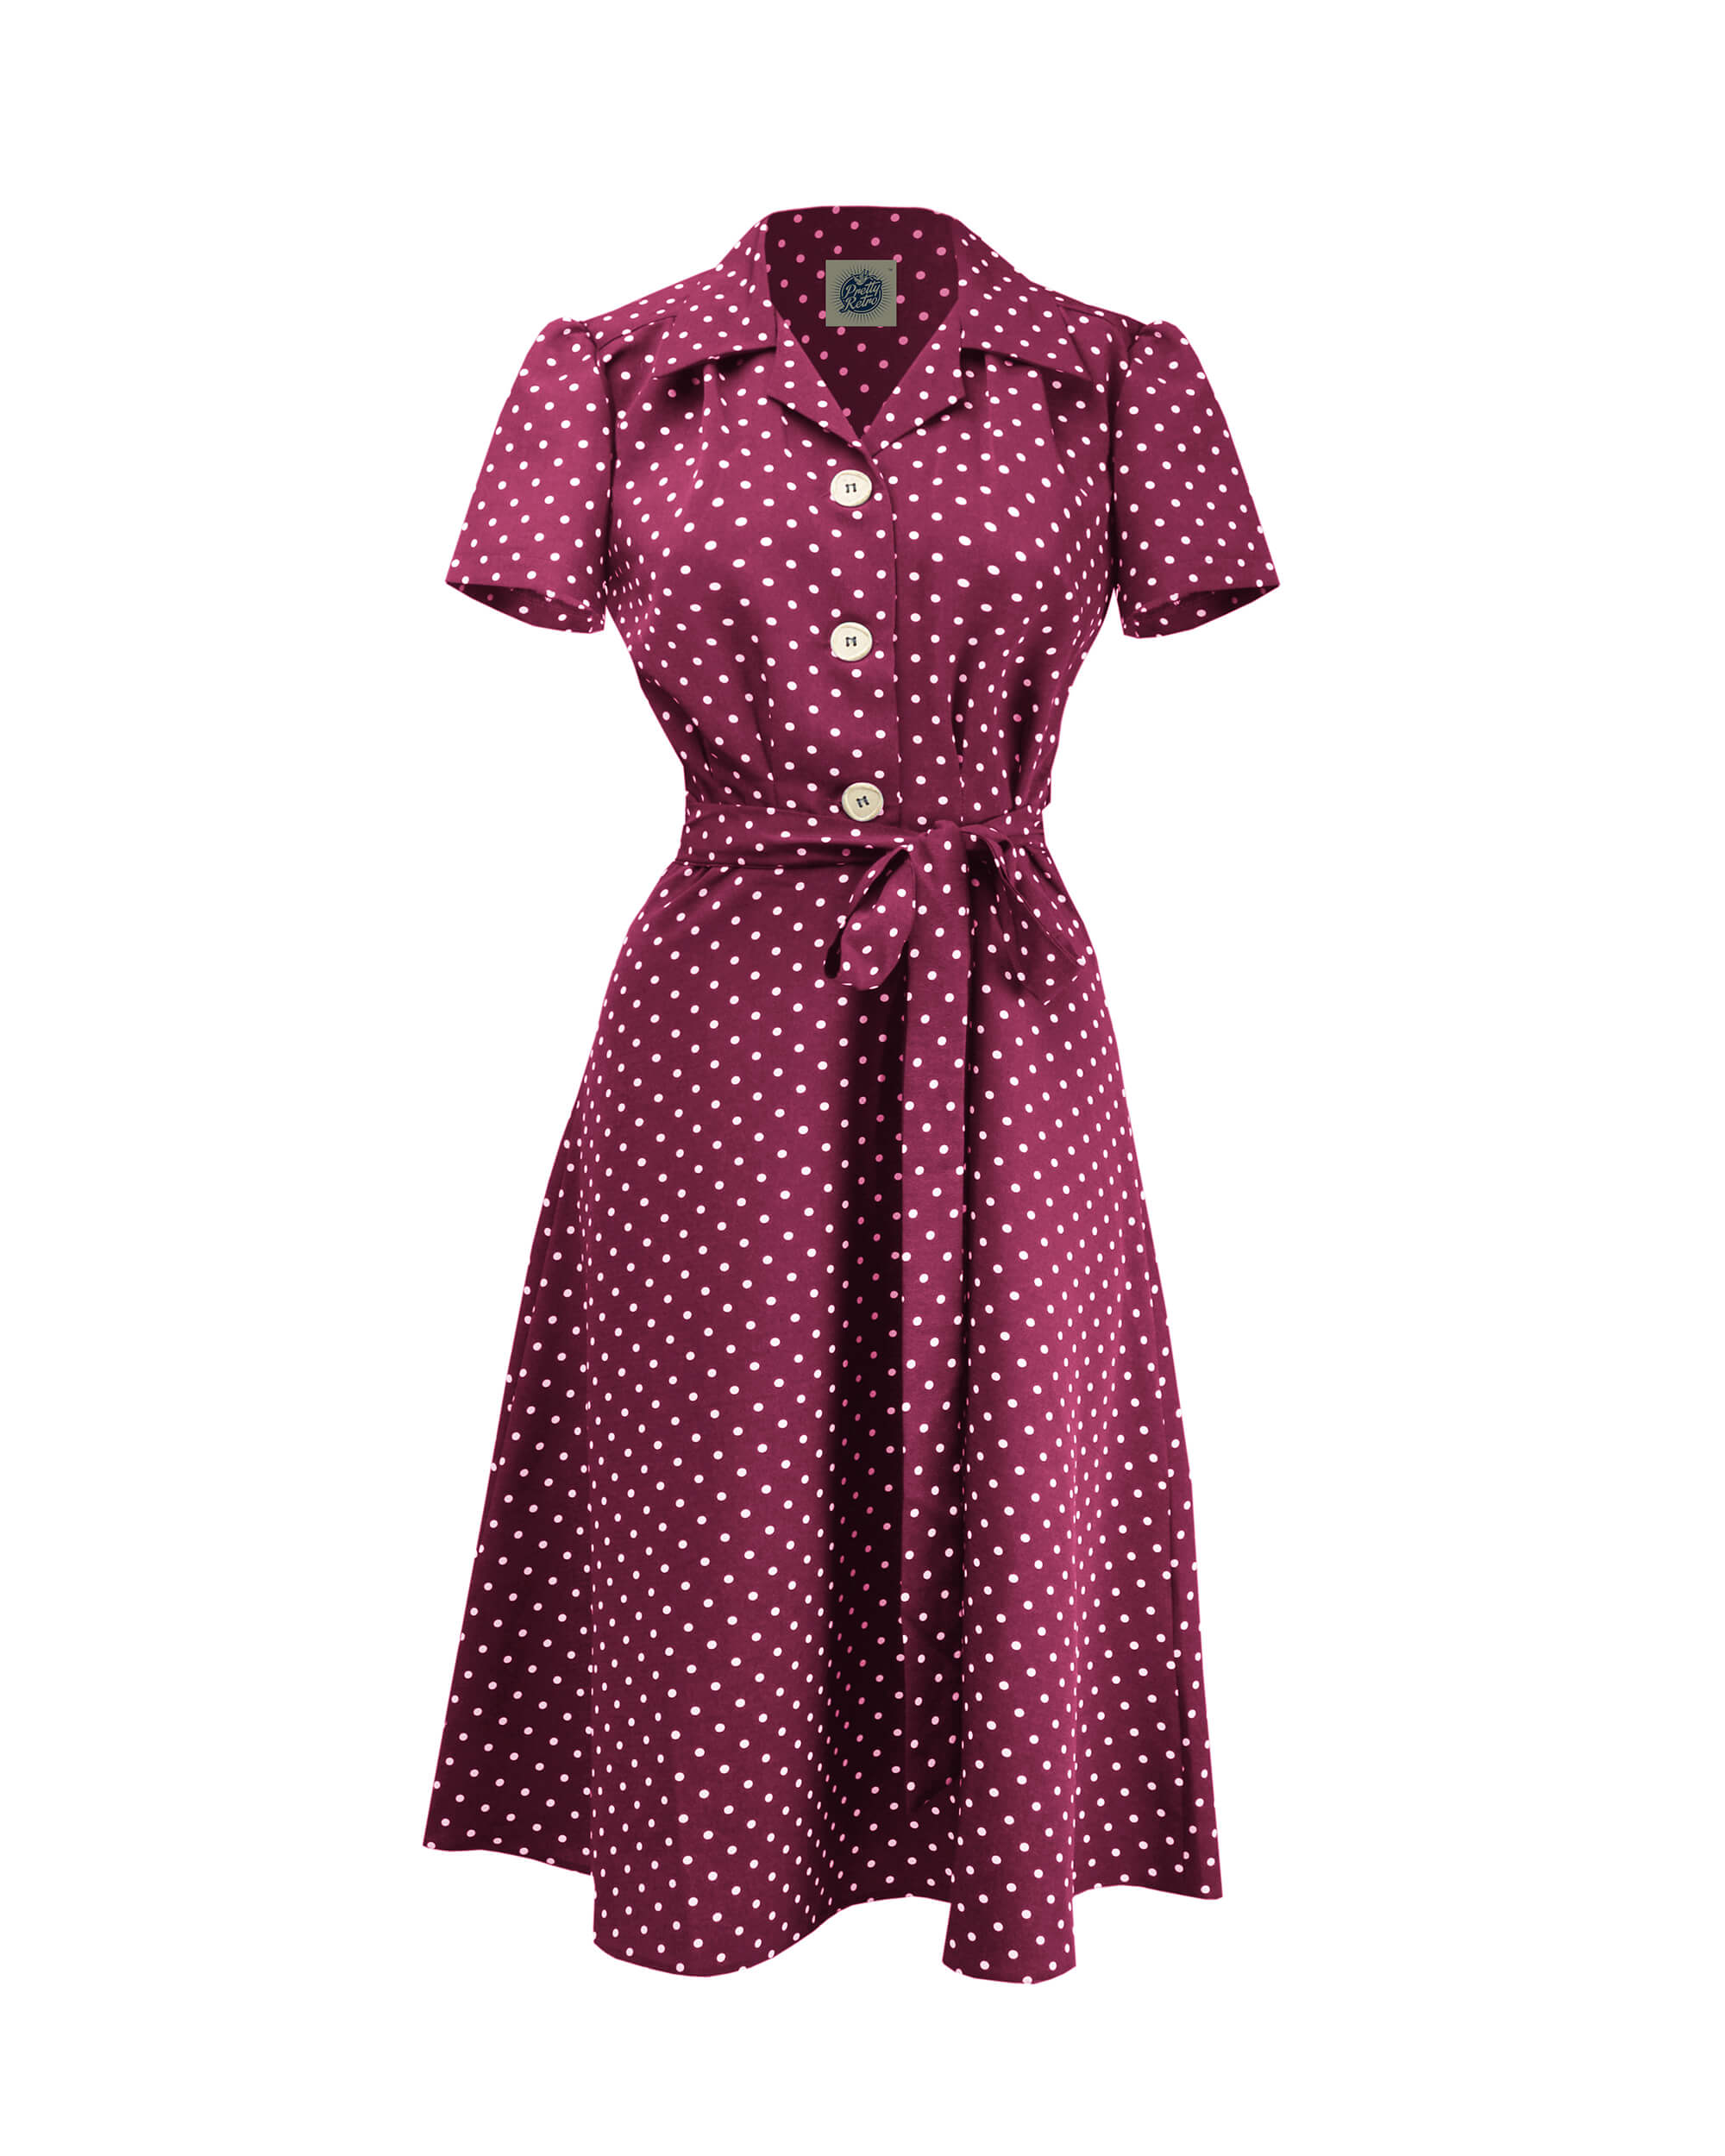 Pretty Retro 40s Shirt Dress - Wine Polka